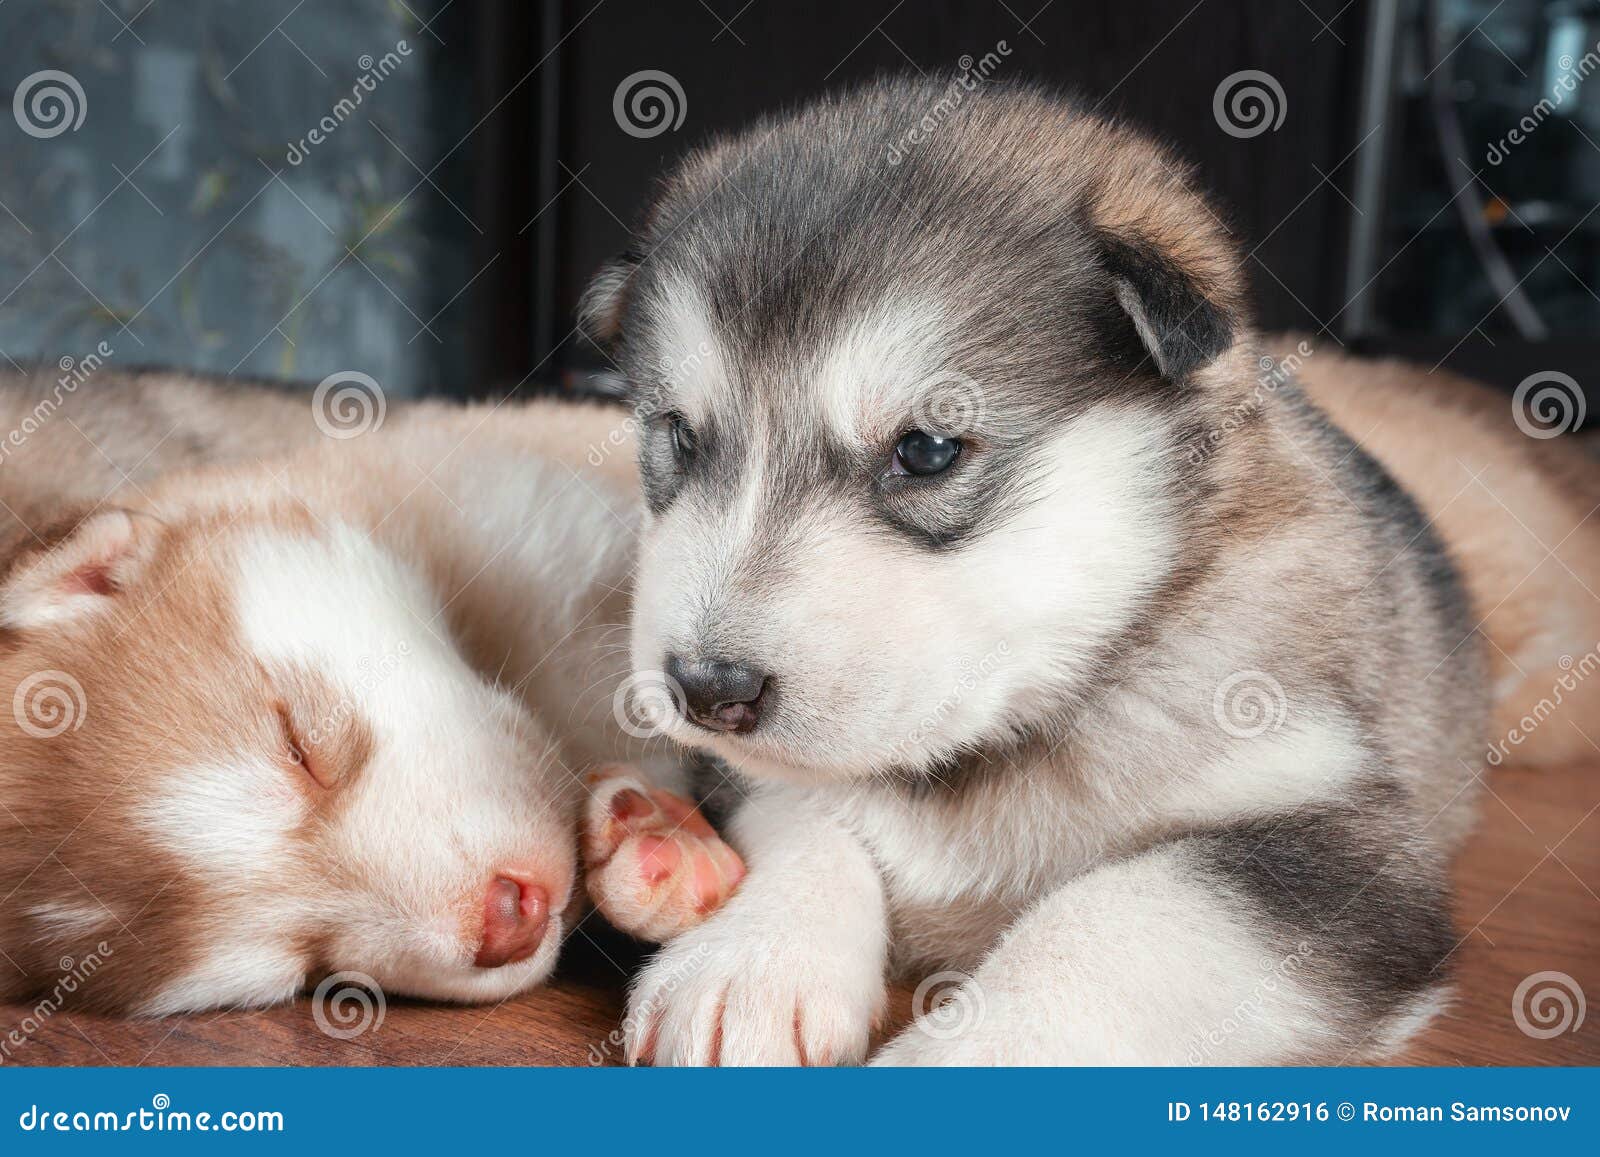 Funny, Cute Alaskan Malamute Puppy Stock Photo - Image of background, eyes:  148162916